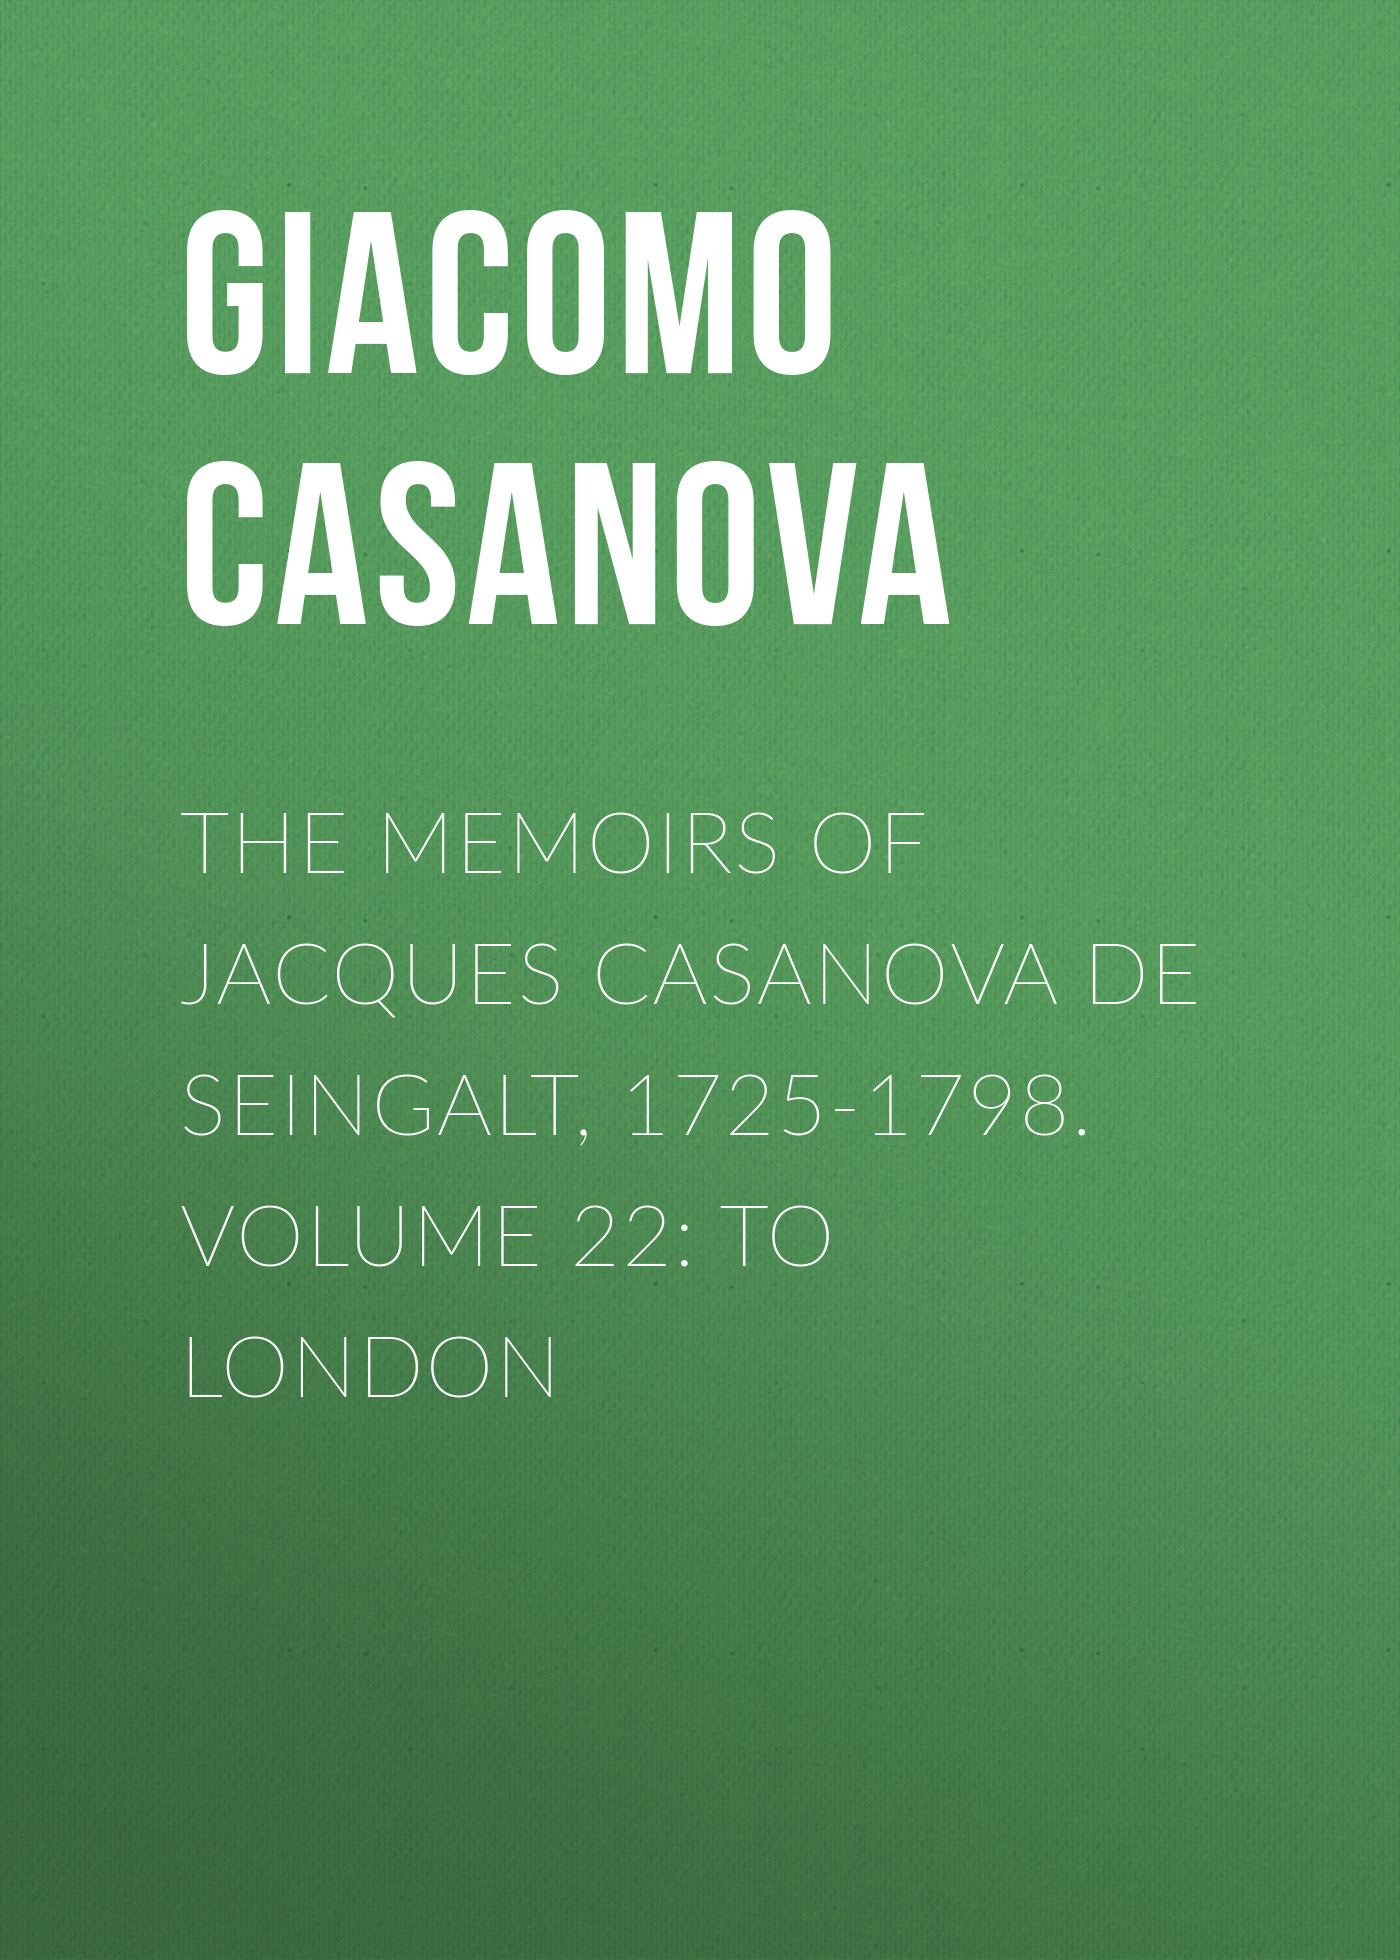 The Memoirs of Jacques Casanova de Seingalt, 1725-1798. Volume 22: to London